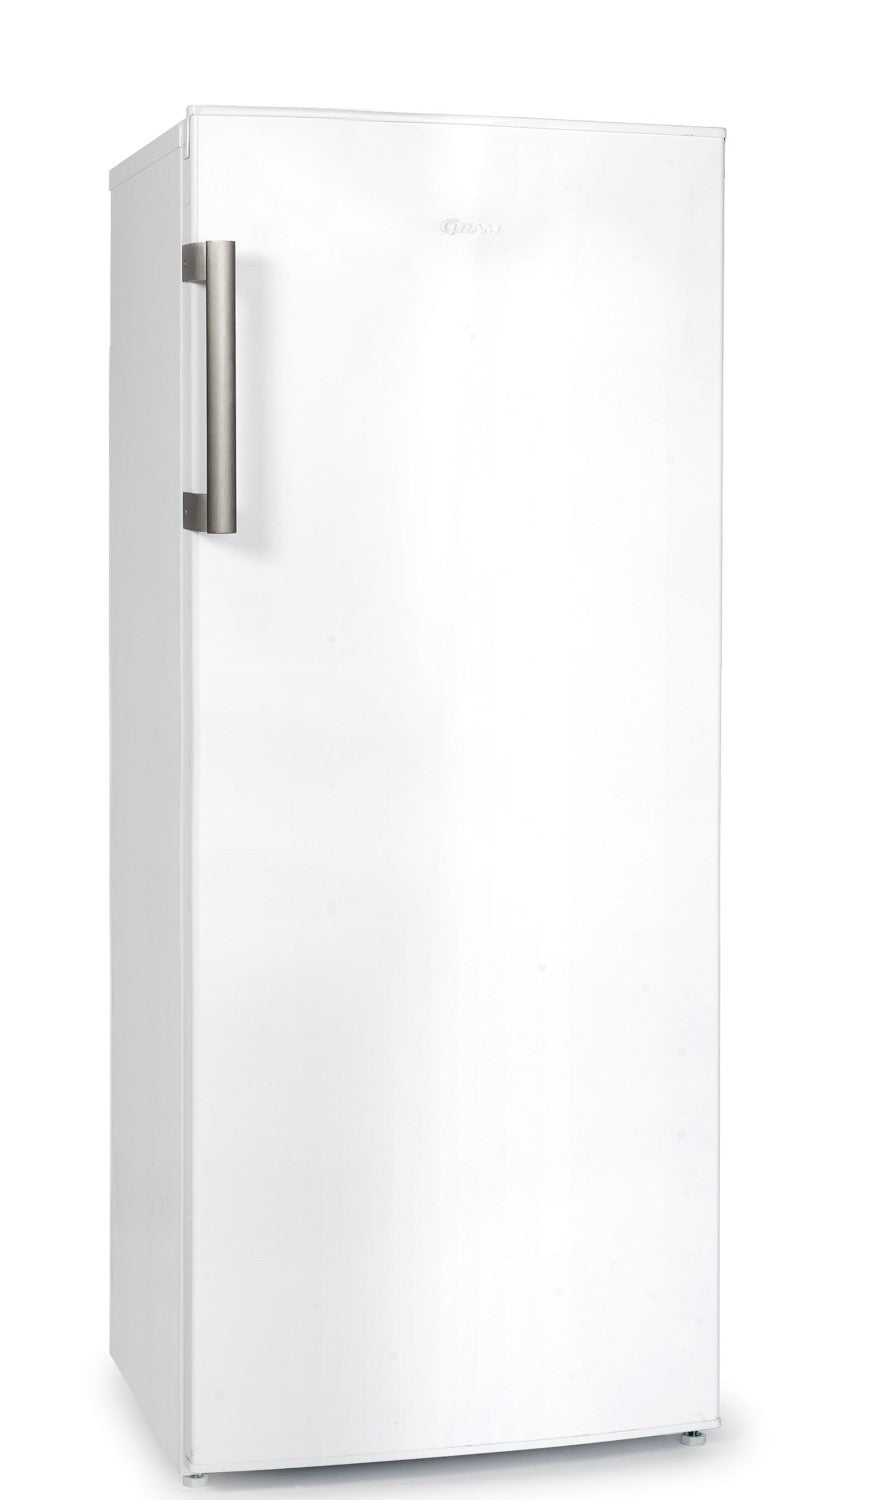 Gram køleskab KS3286-90/1 - D10591